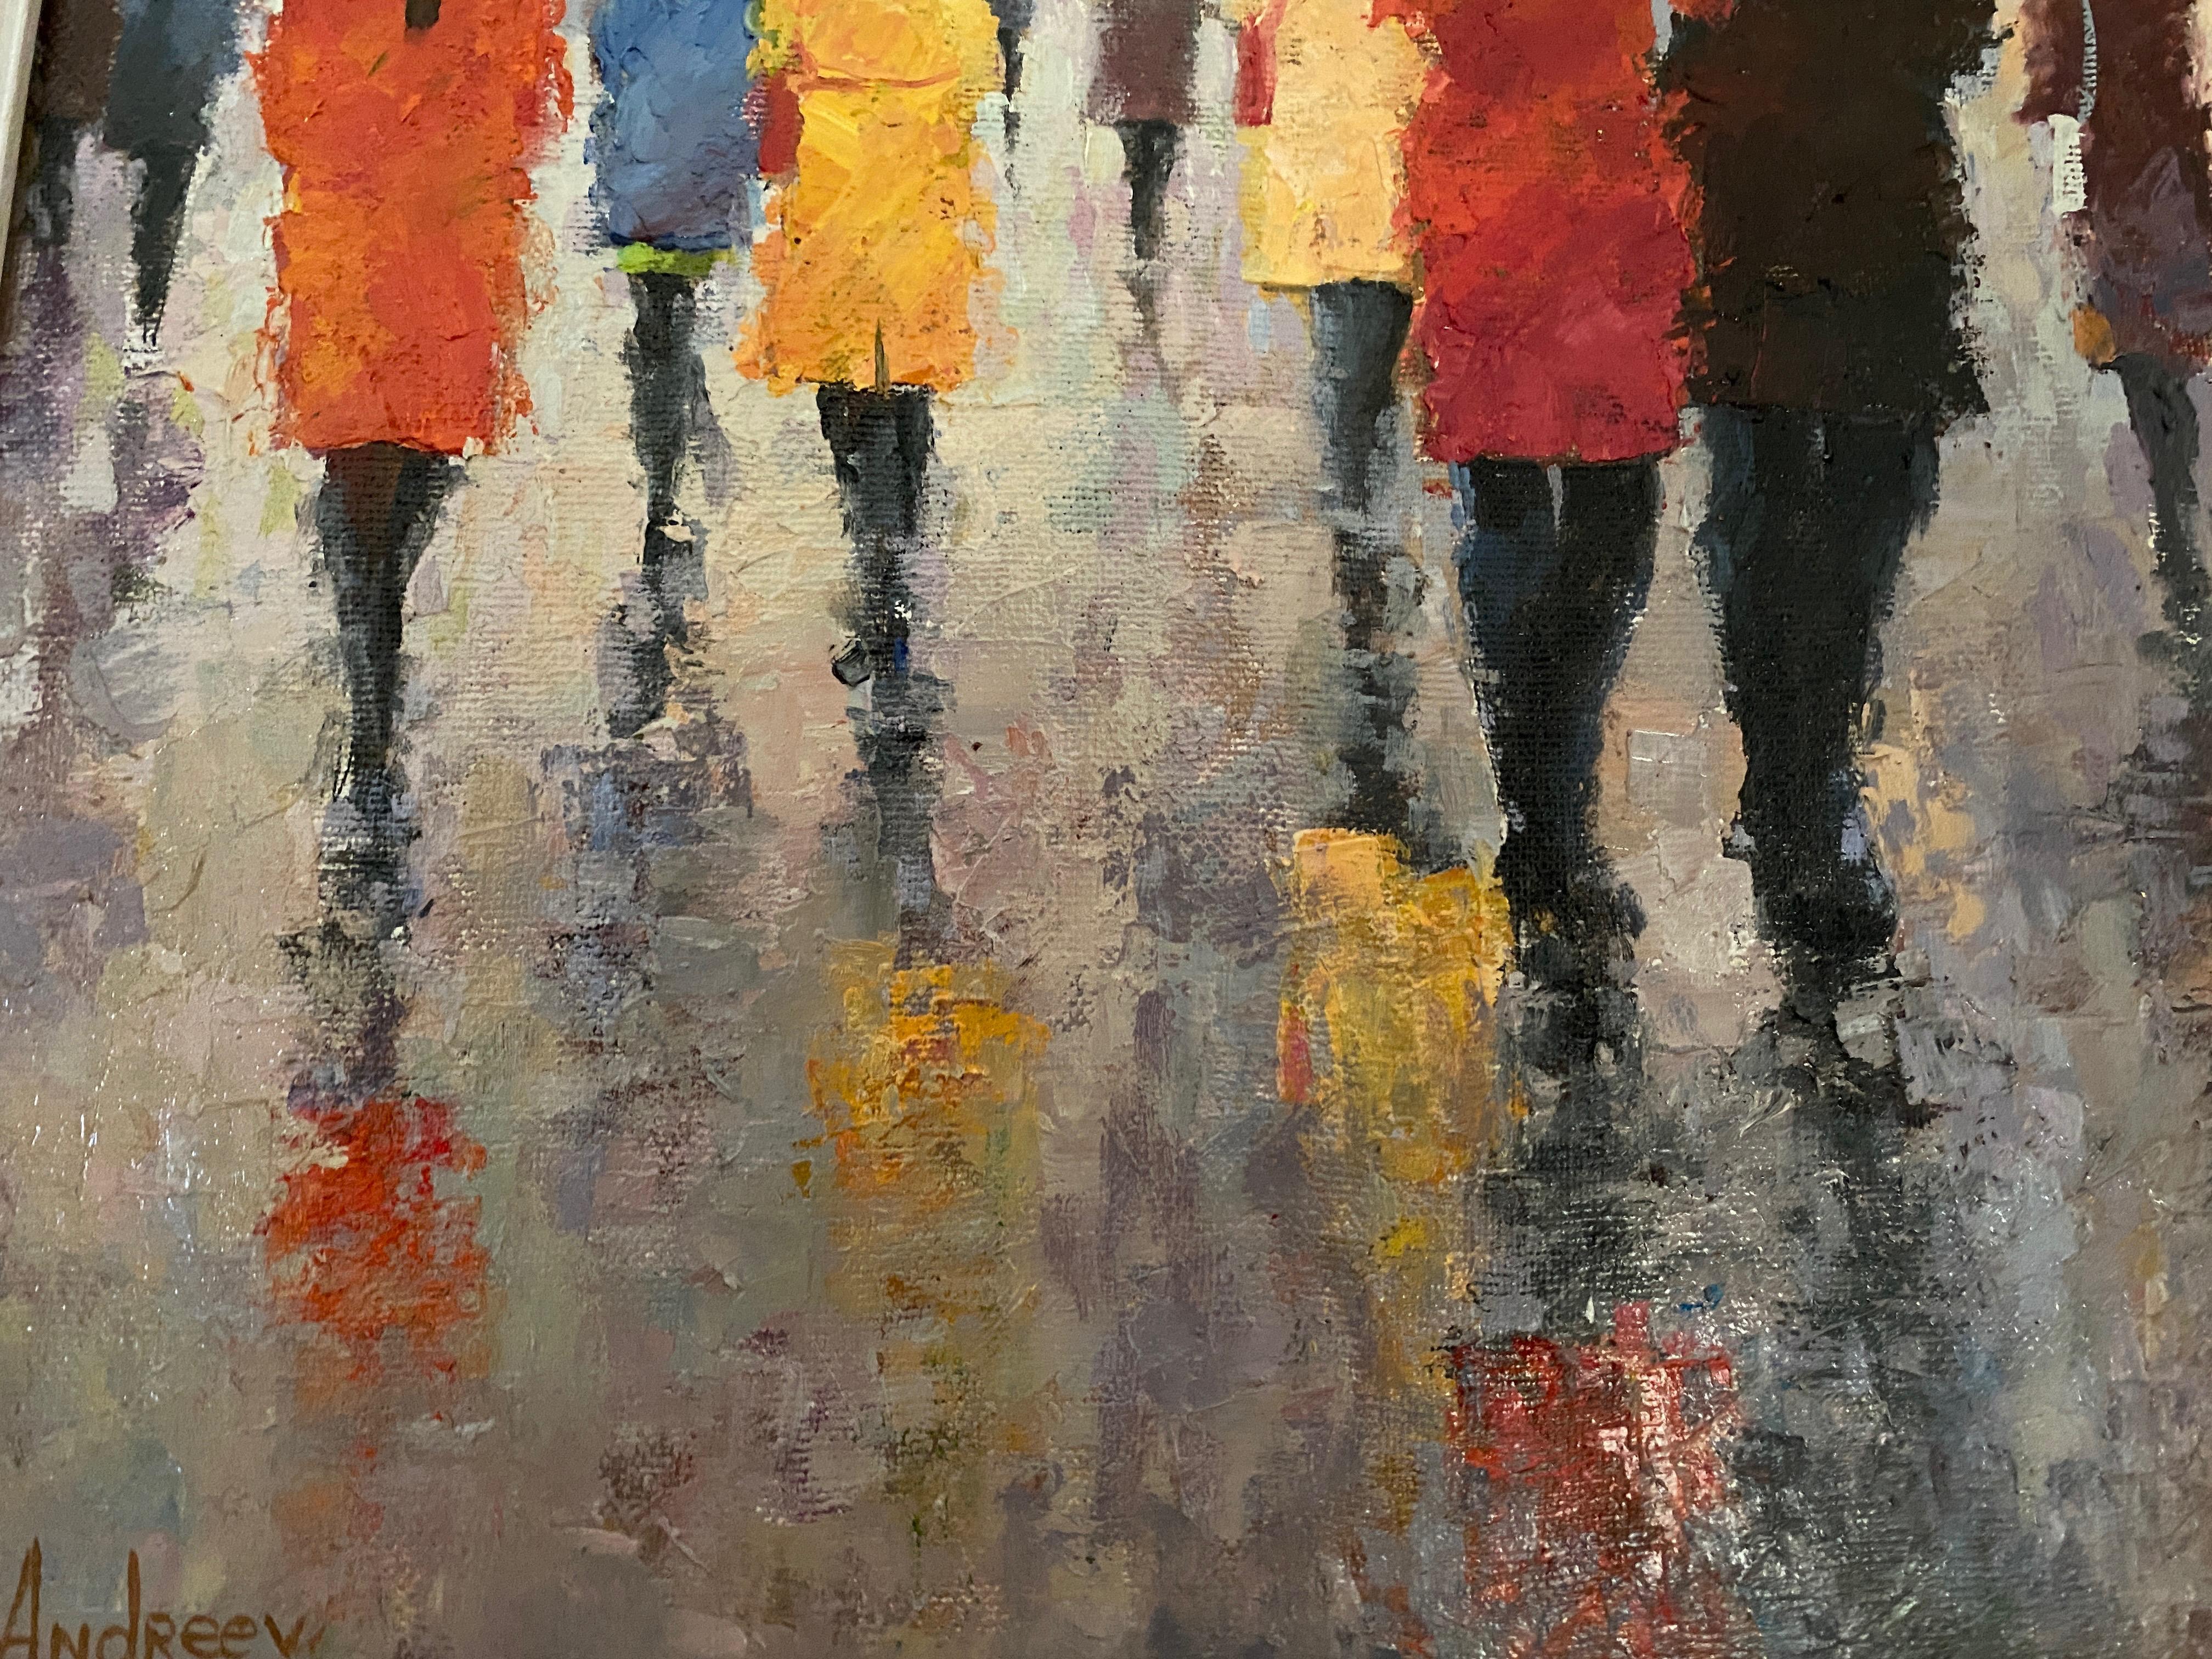 Rainy day. Oil on canvas. Impressionistic colorful street scene. 1